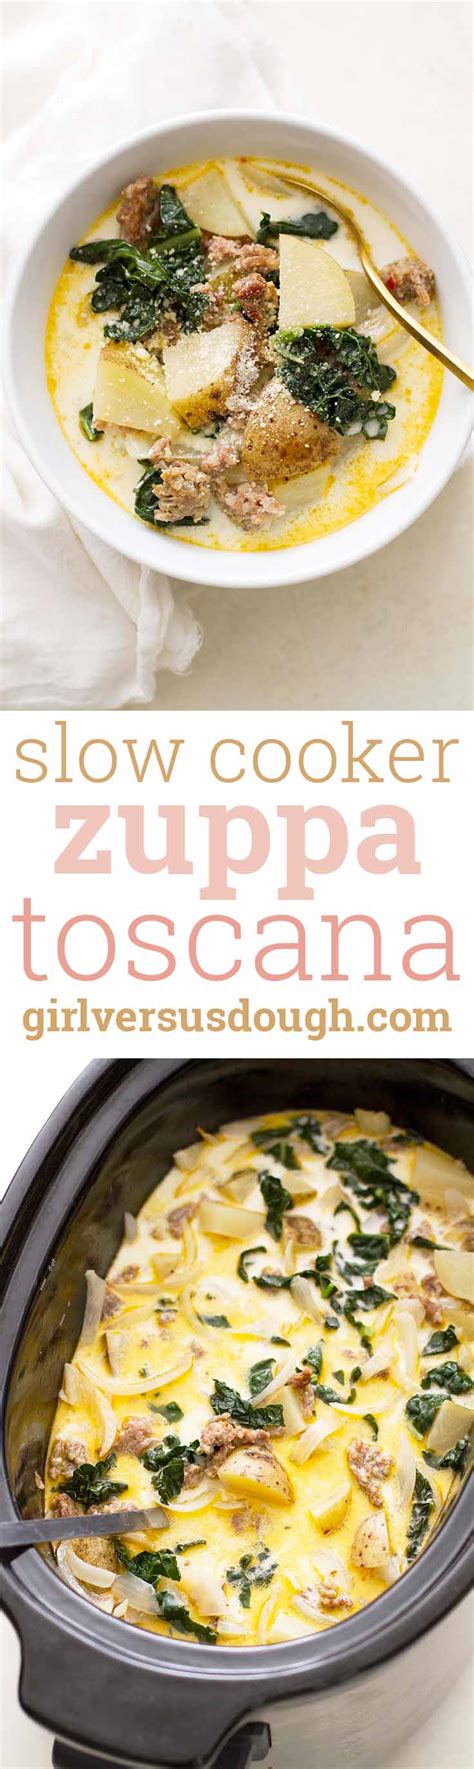 Taste, adjust the seasonings, and serve. Slow Cooker Zuppa Toscana | Girl Versus Dough